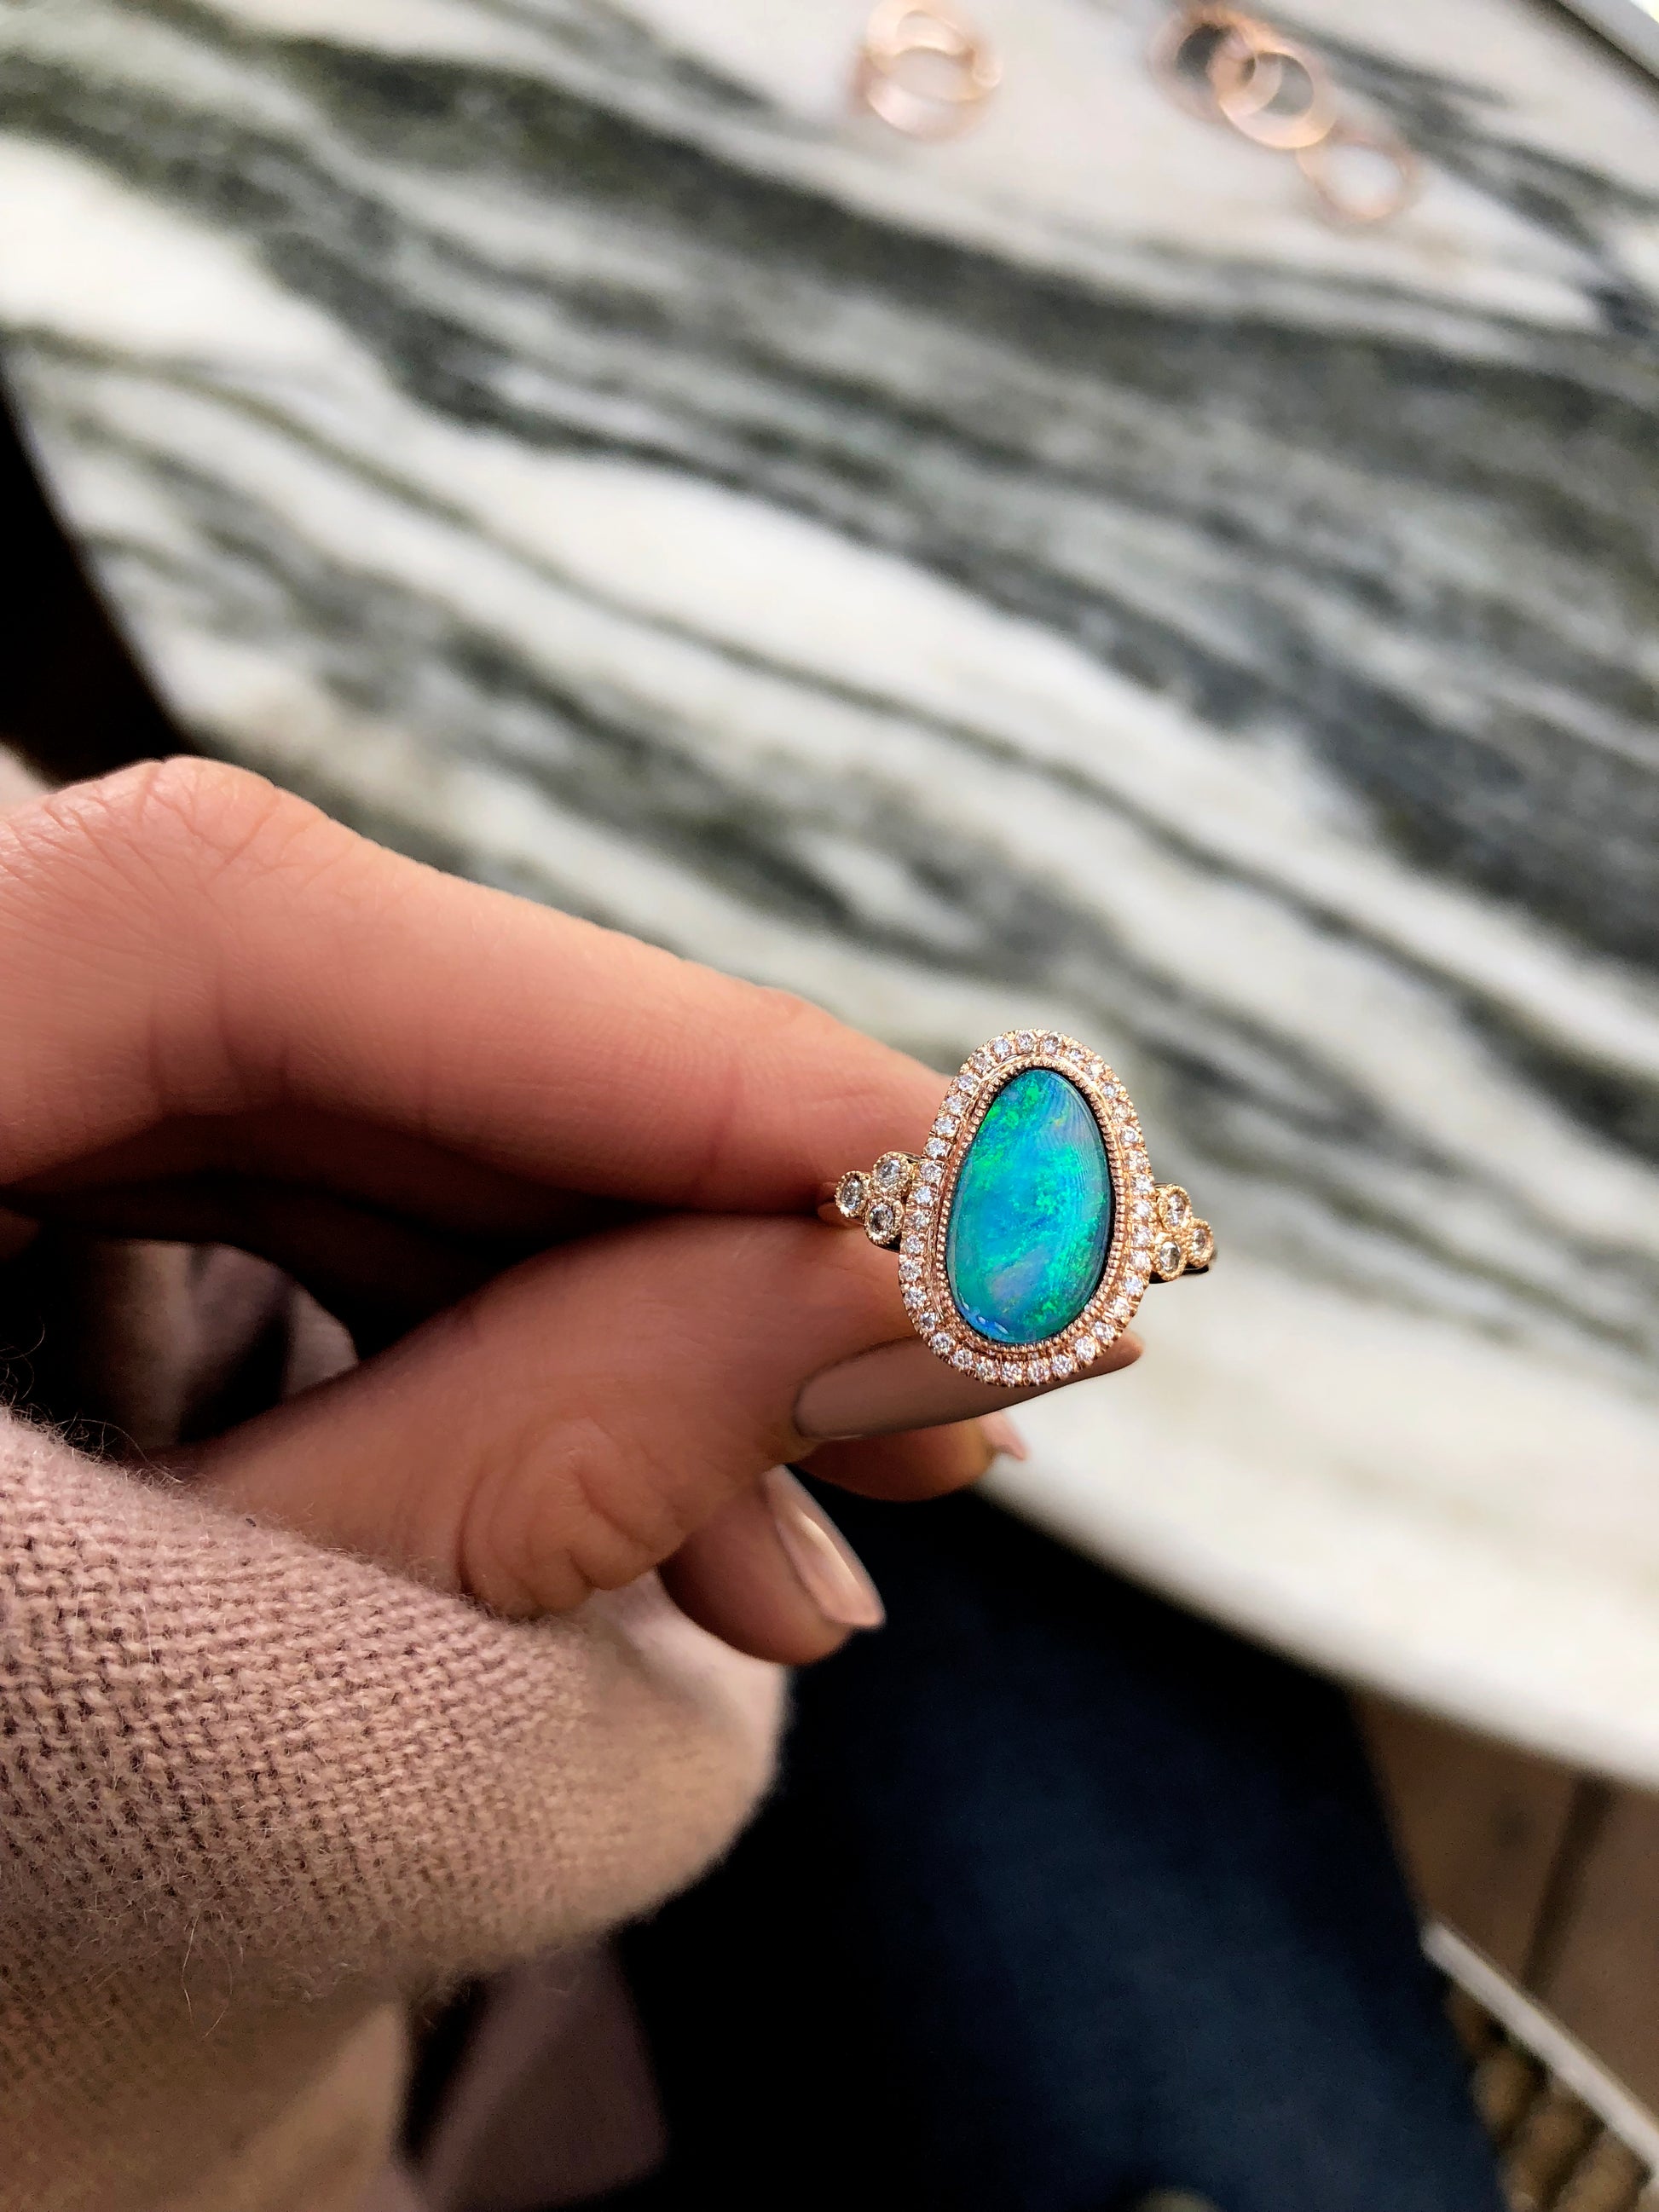 14kt rose gold and diamond opal bezel ring - Luna Skye